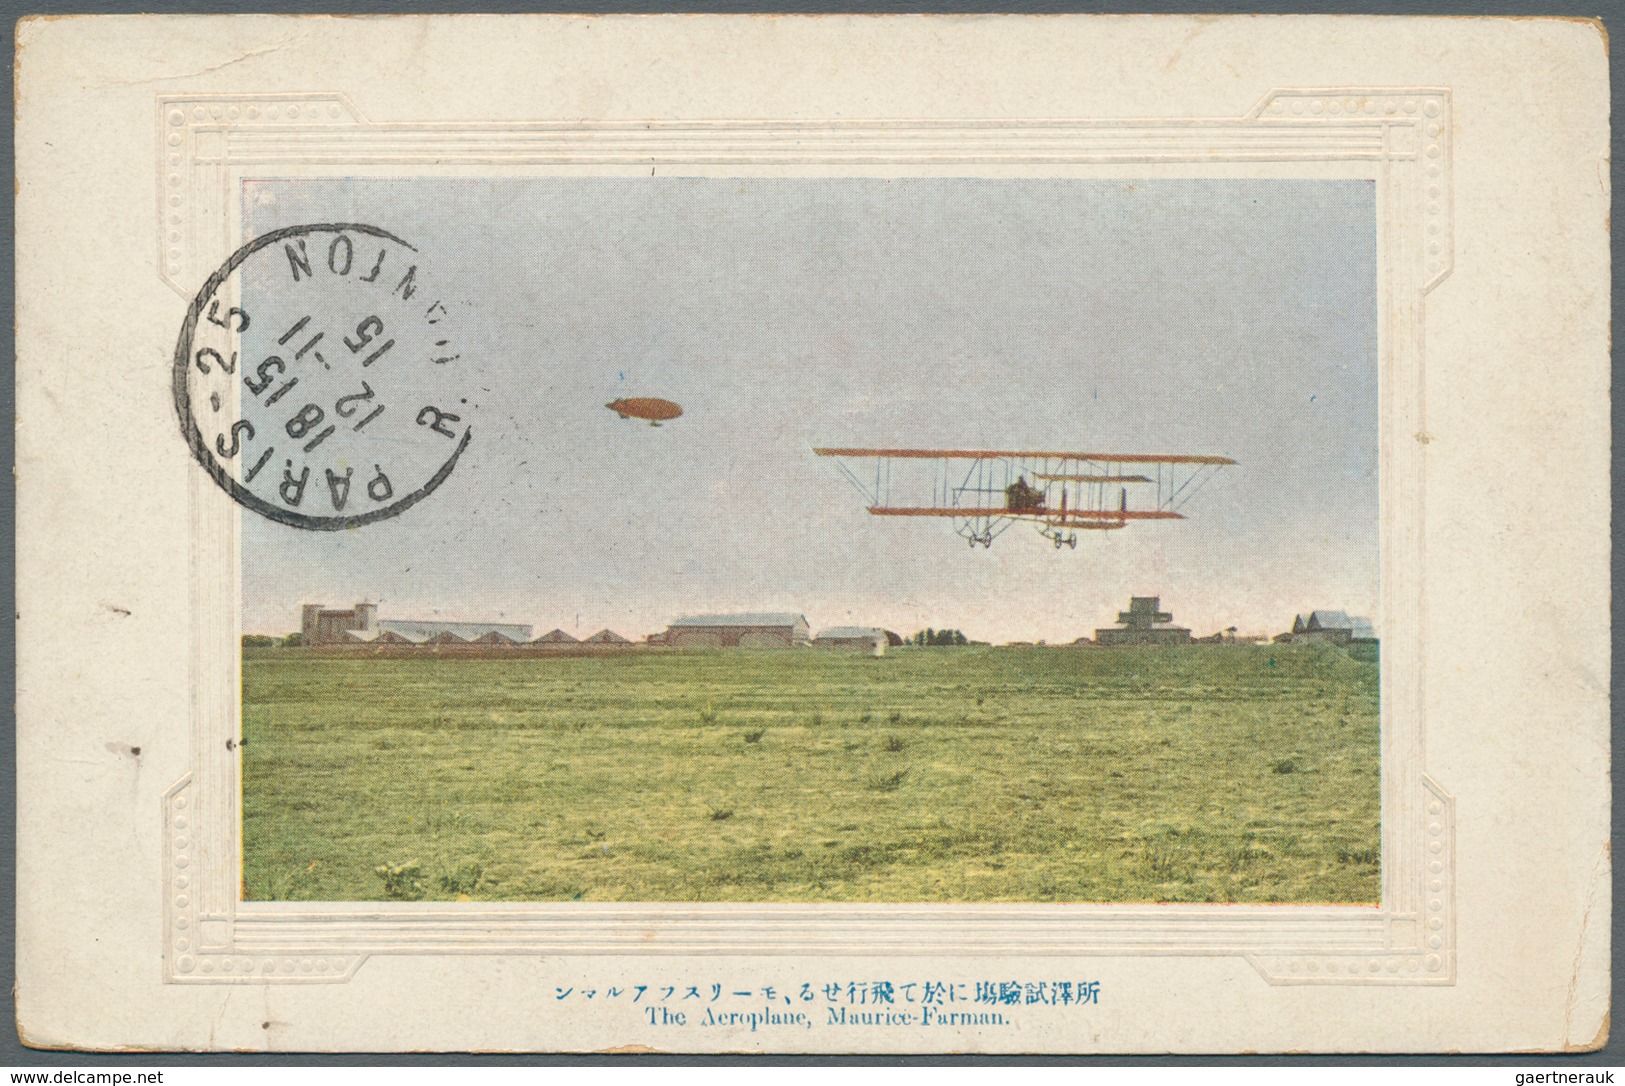 Japan: 1914/18, the japanese pioneer aviator and WWI-pilot in France, Baron SHIGENO Kiyotake (1882-1